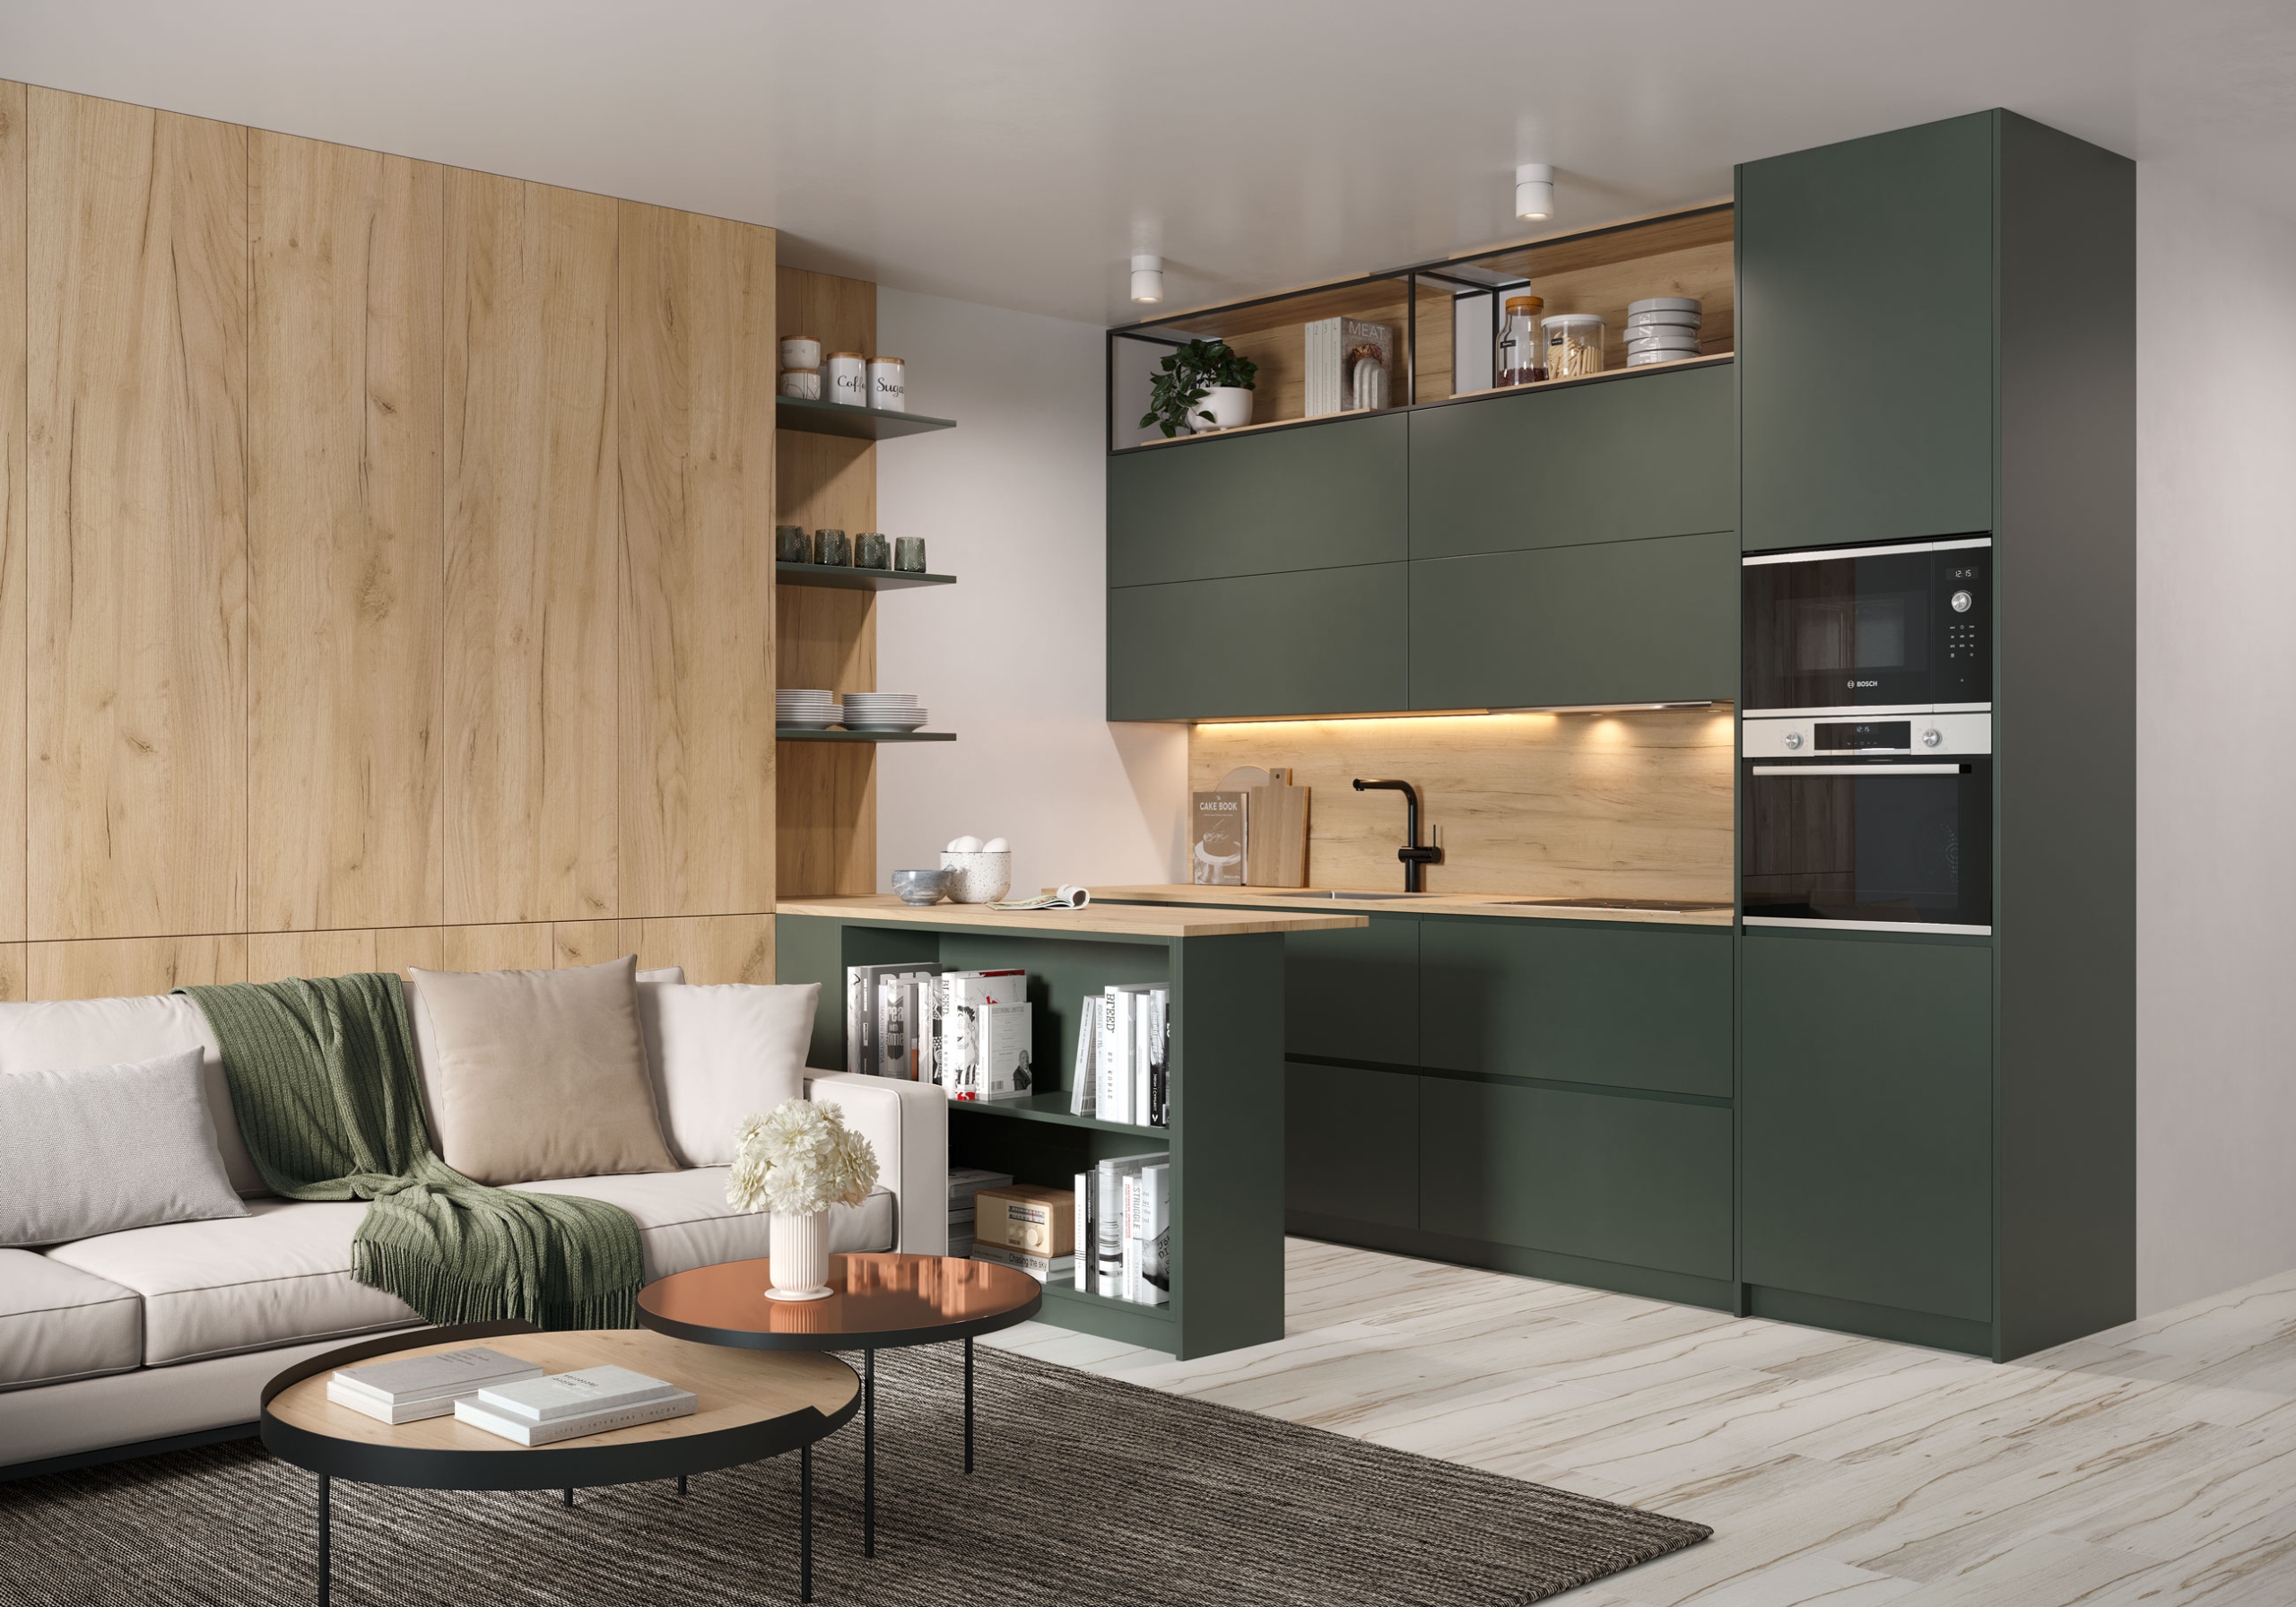 El equipamiento interior de la cocina: ¿cuál elegir?  Kitchen design  decor, Kitchen cabinet design, Kitchen decor apartment